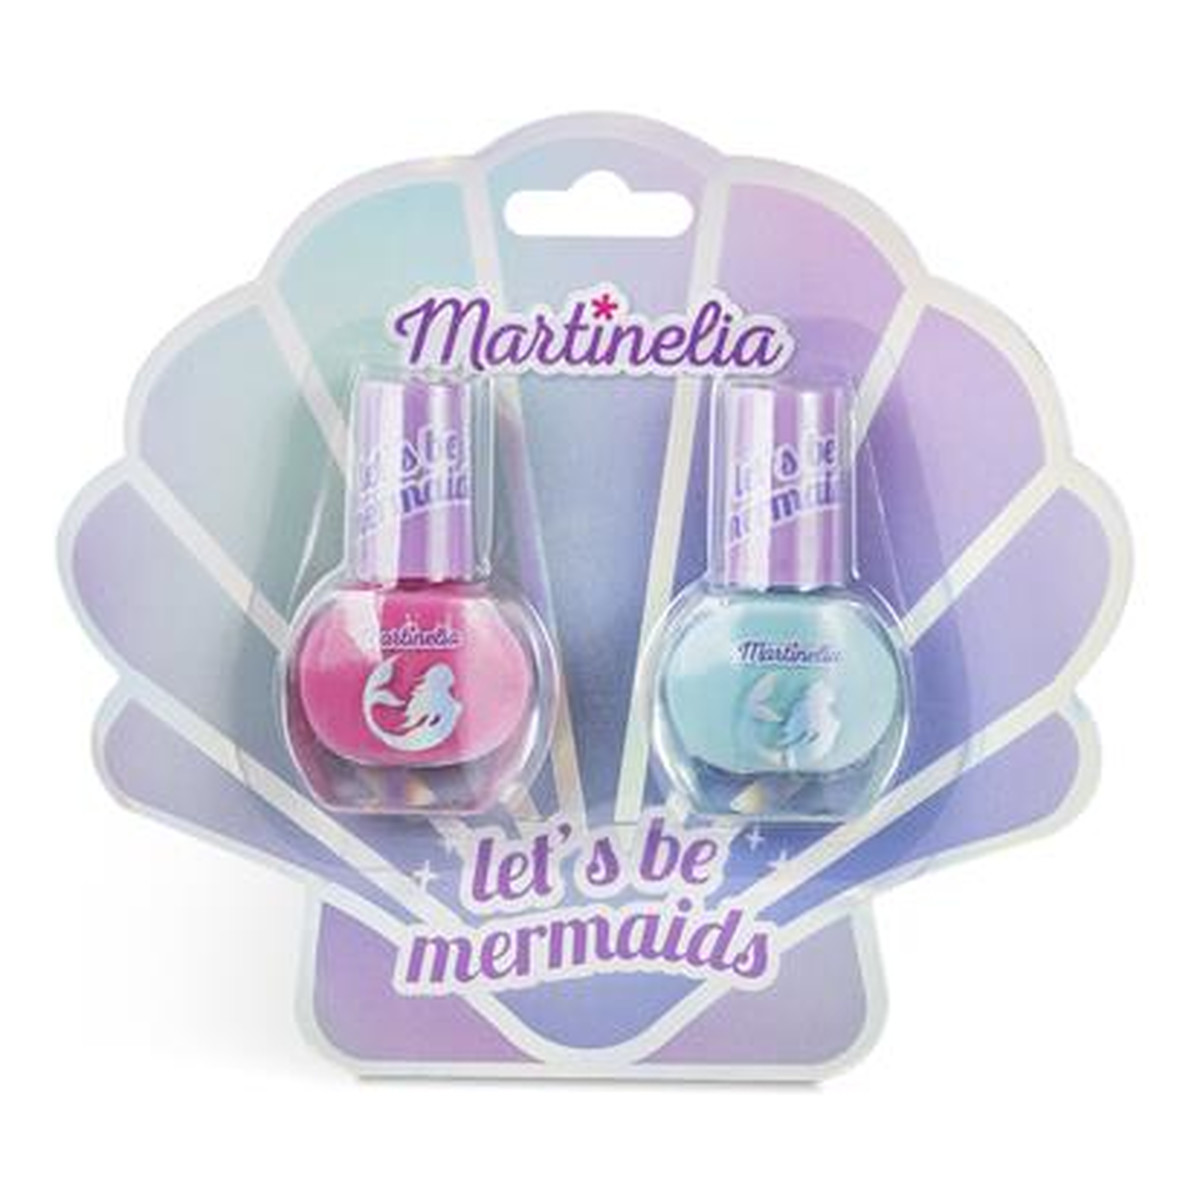 Martinelia Zestaw do paznokci let's be mermaids nail duo